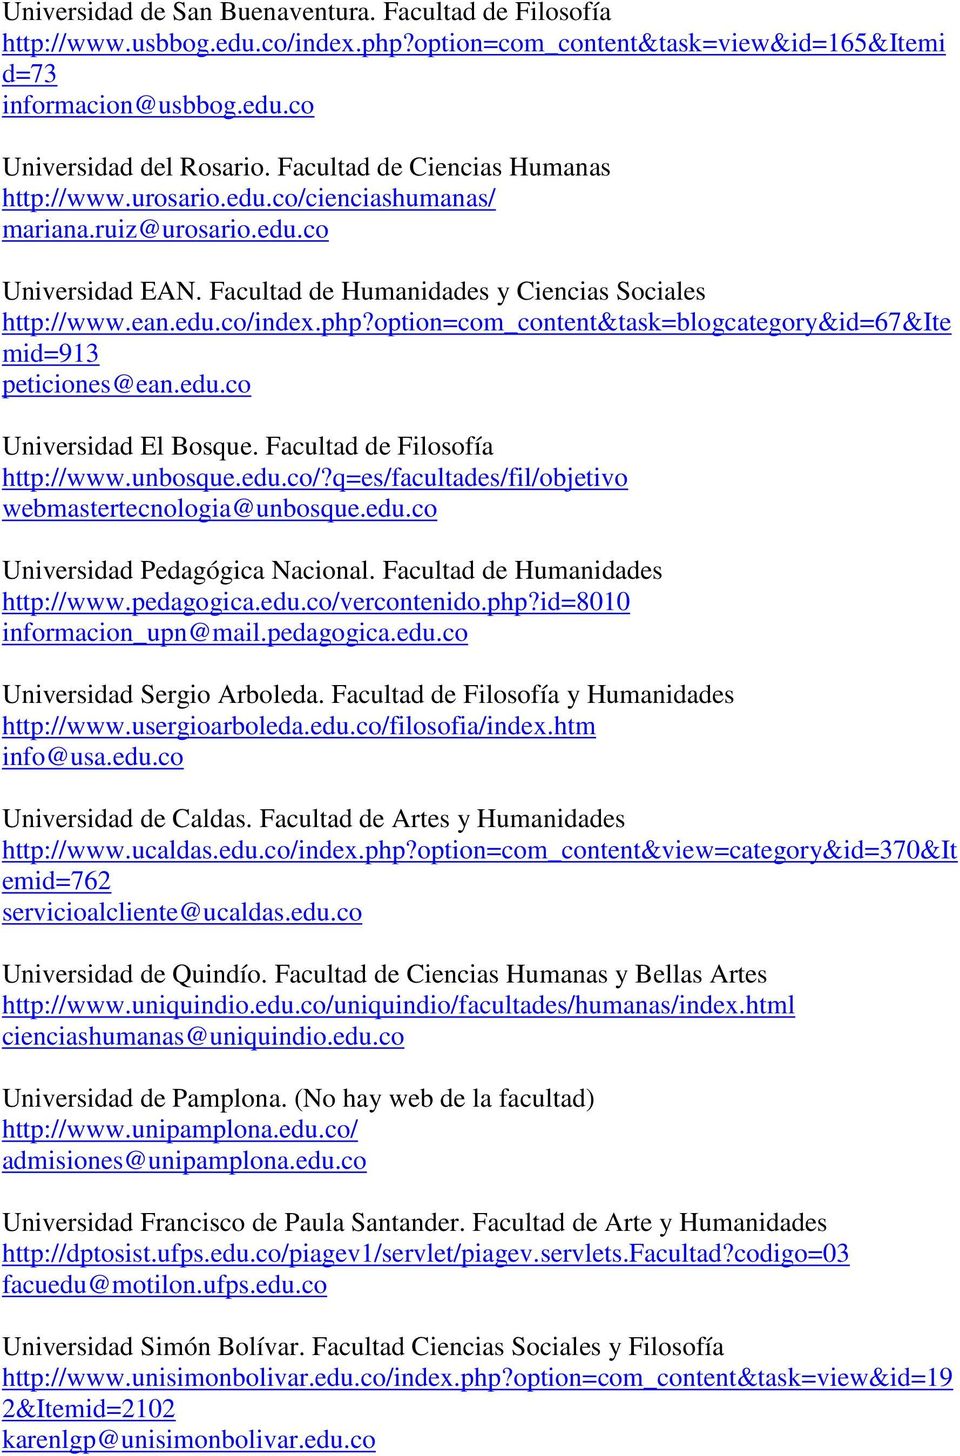 option=com_content&task=blogcategory&id=67&ite mid=913 peticiones@ean.edu.co Universidad El Bosque. Facultad de Filosofía http://www.unbosque.edu.co/?